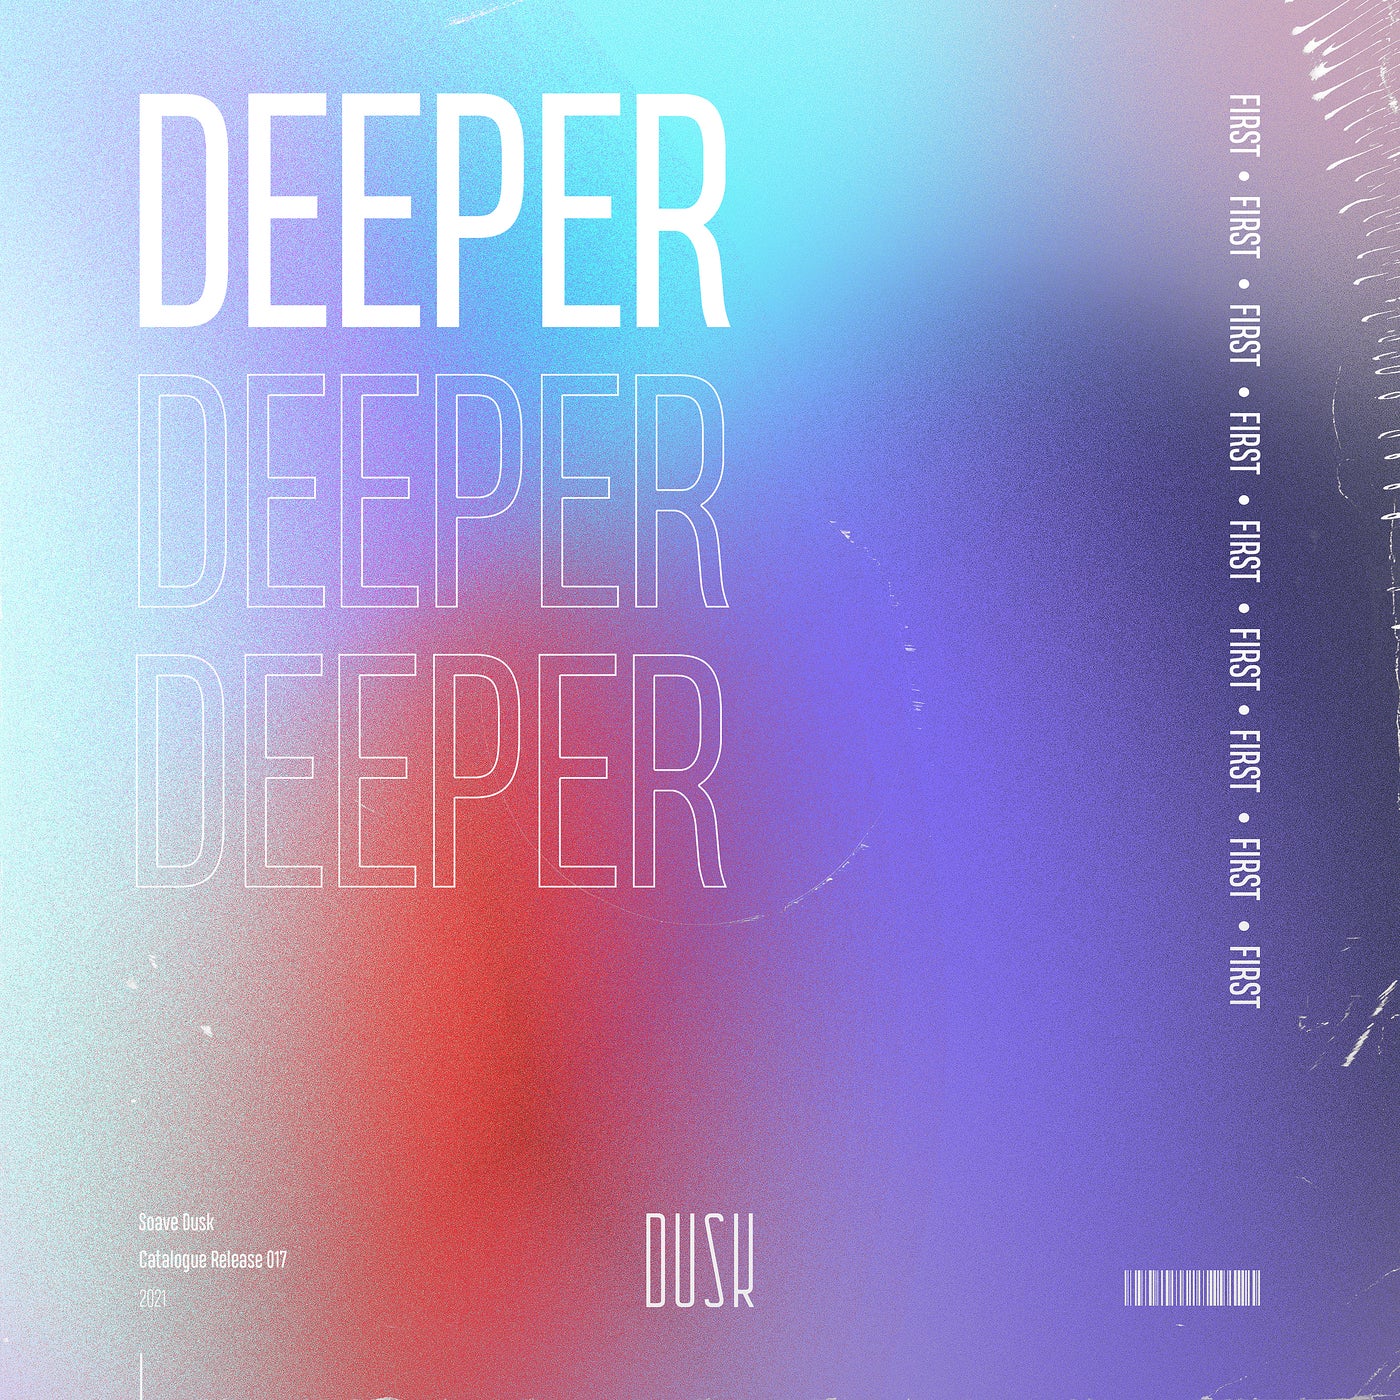 Deep extended mix. Apoena must go Deeper (Original Mix).